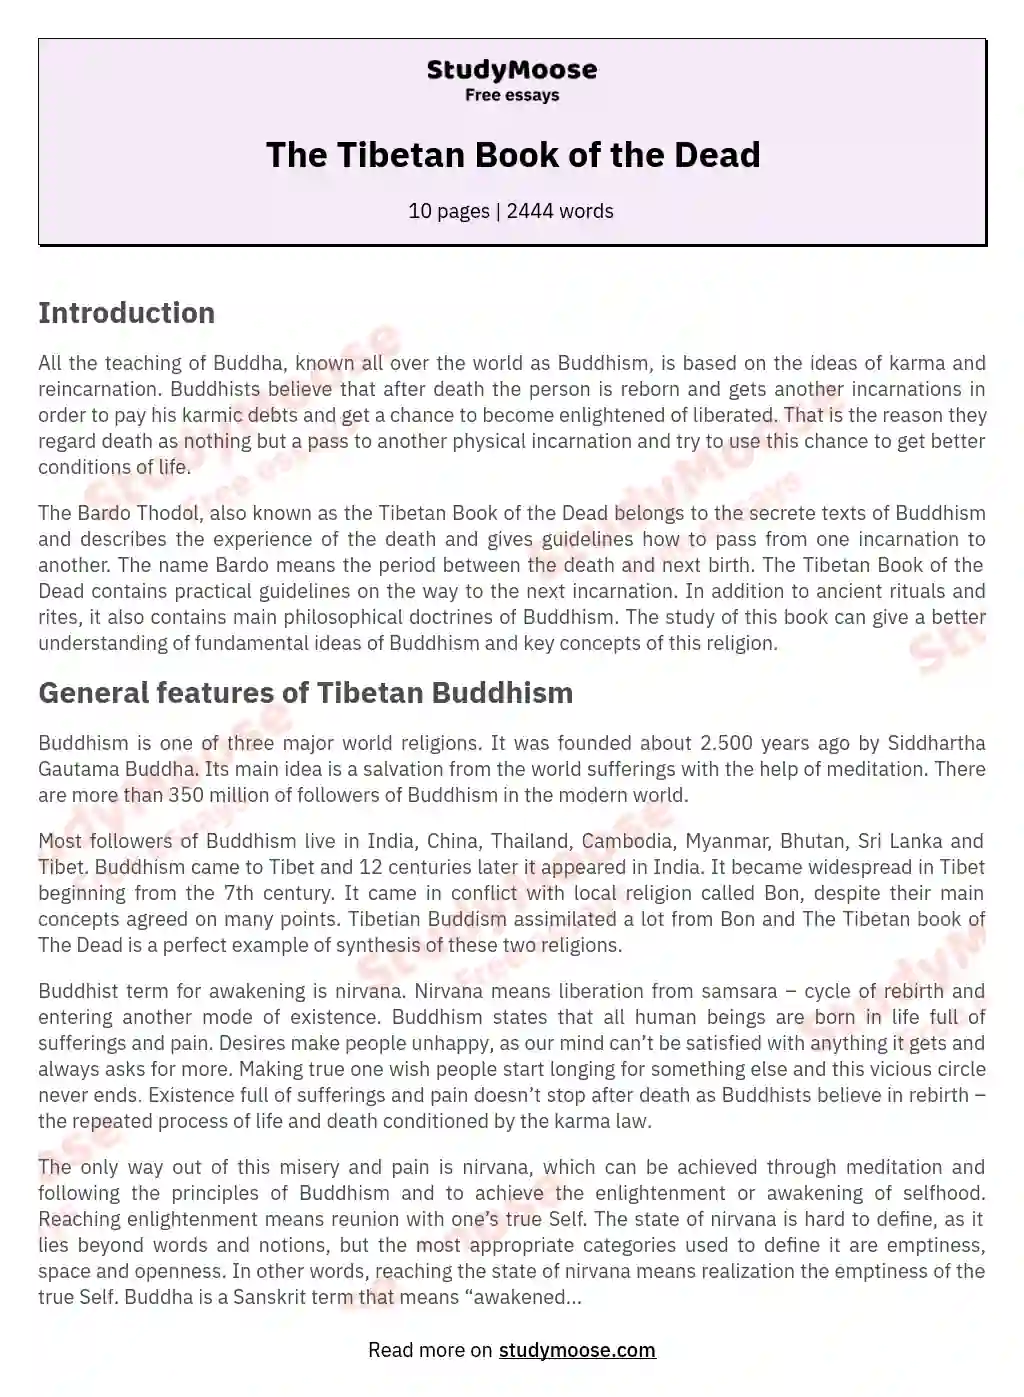 The Tibetan Book of the Dead essay